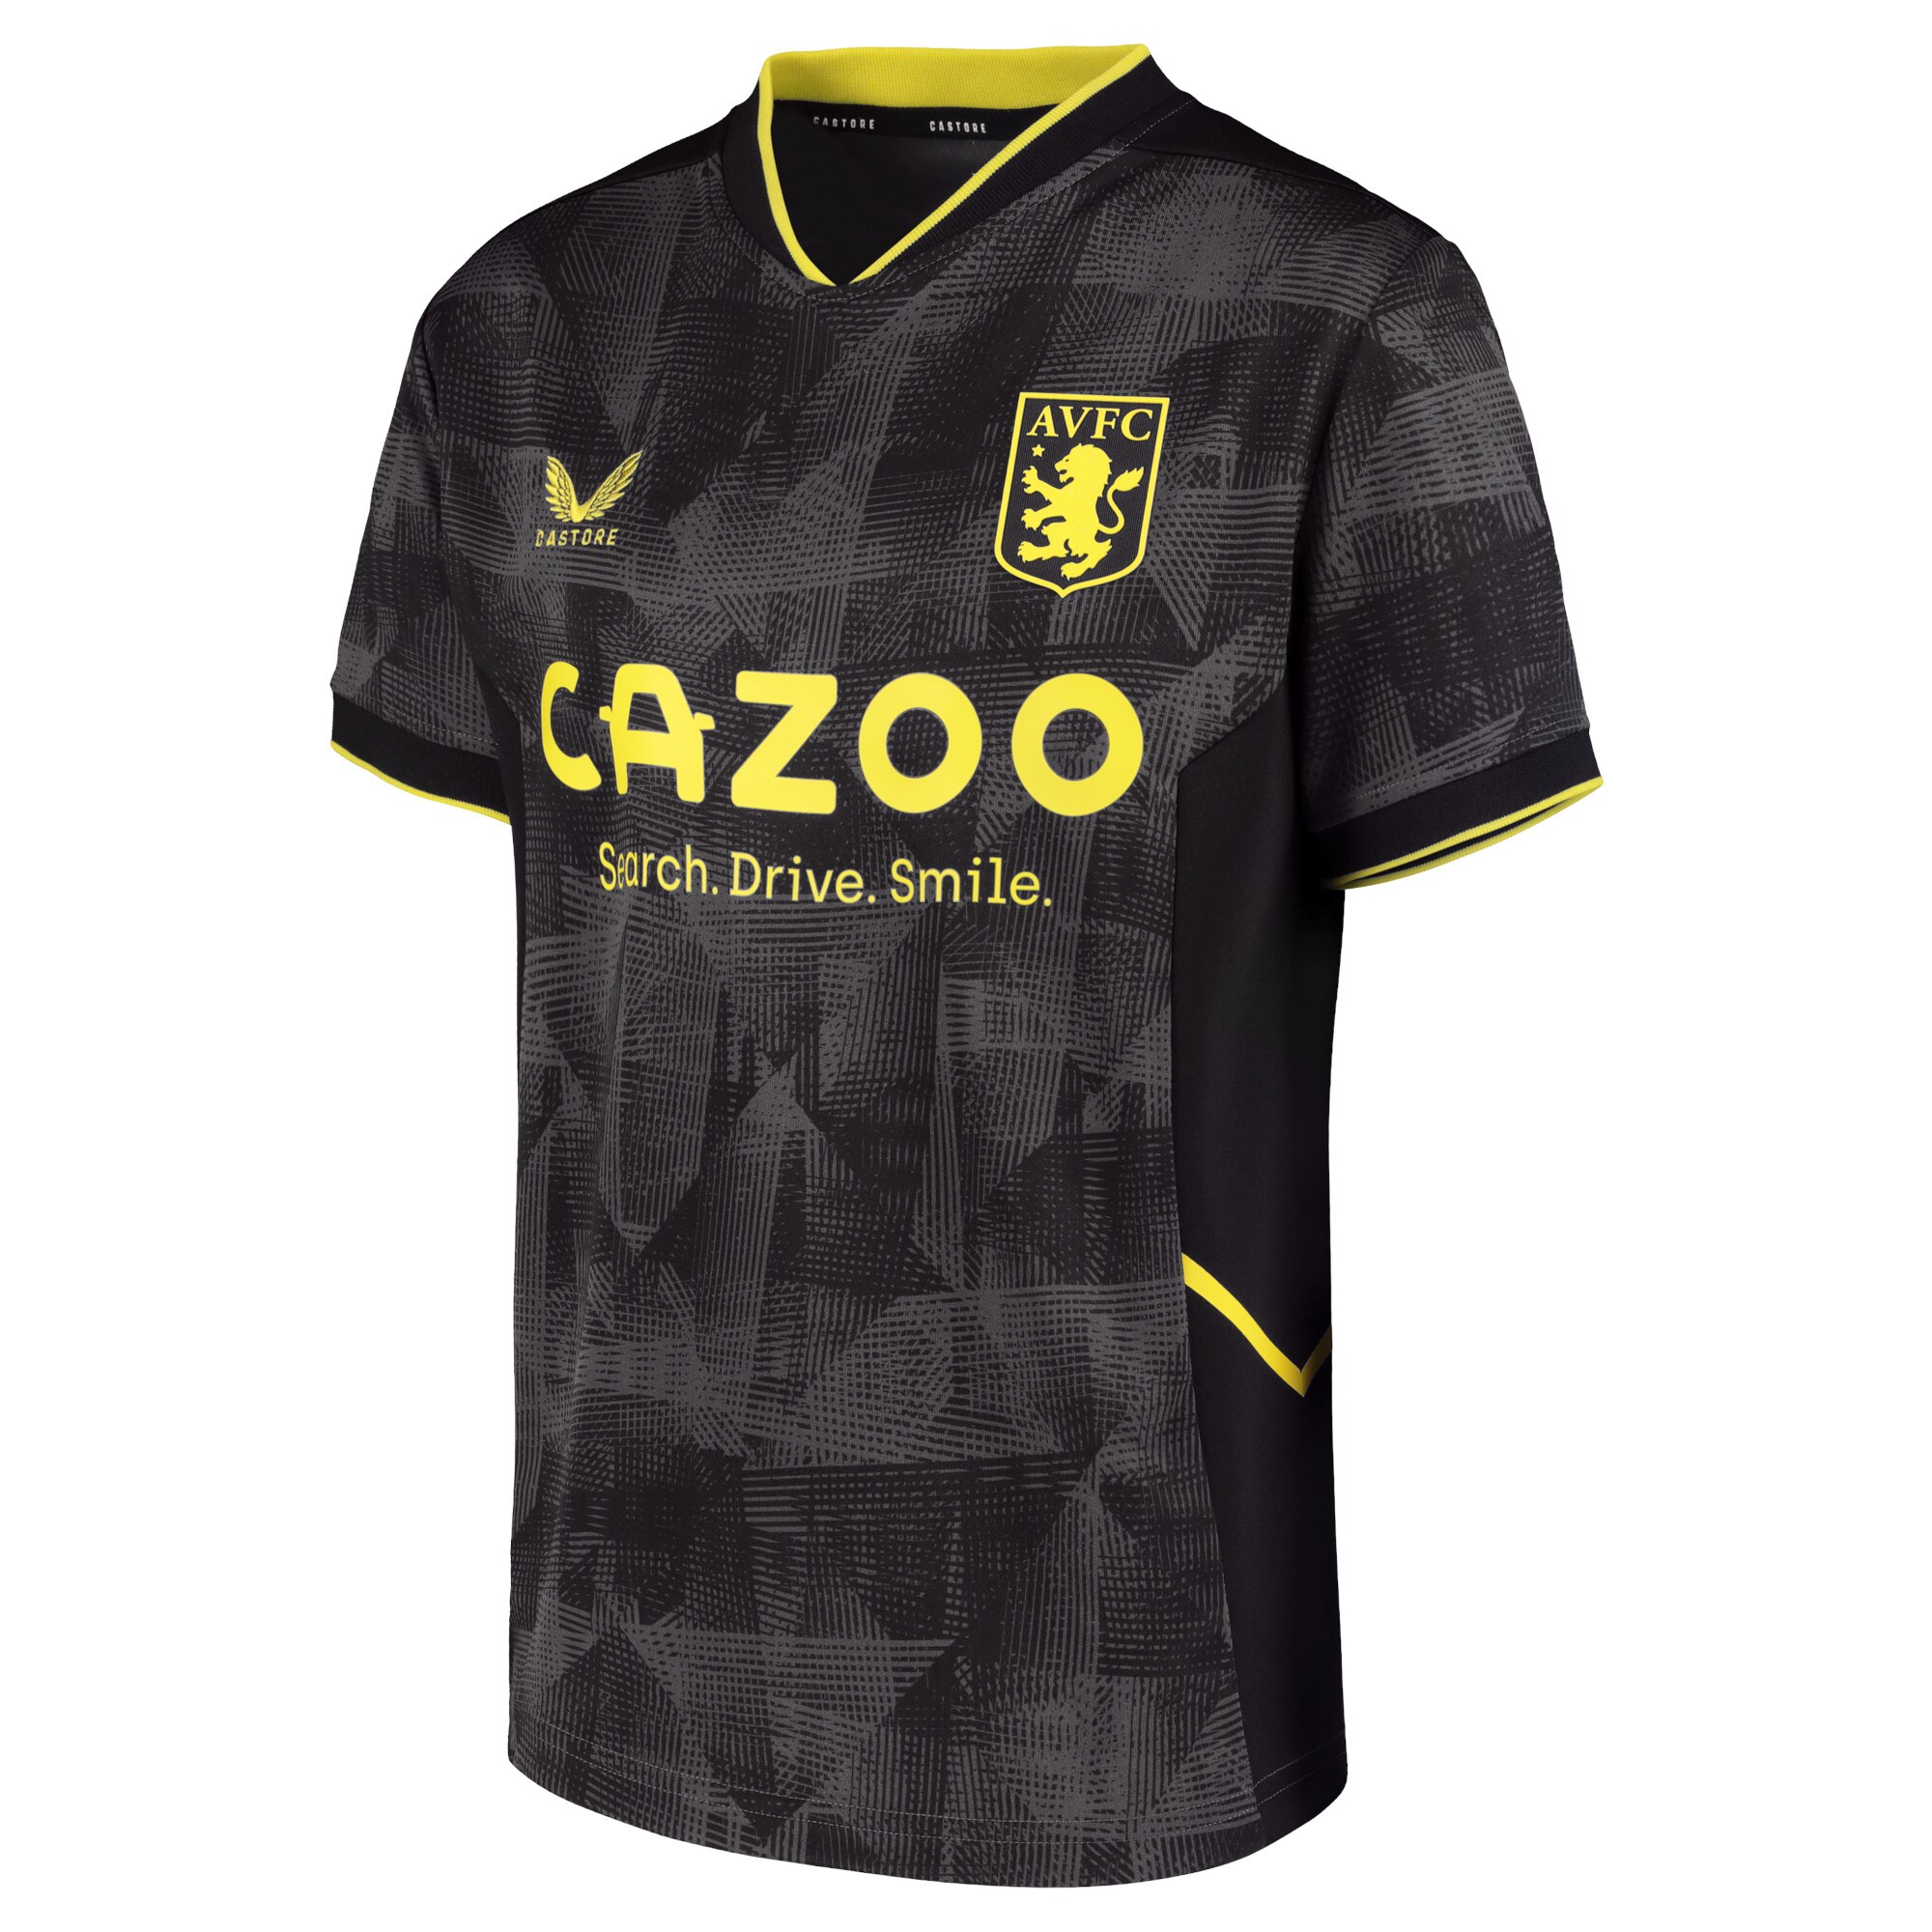 Aston Villa Cup Third Shirt 2022-23 with McGinn 7 printing